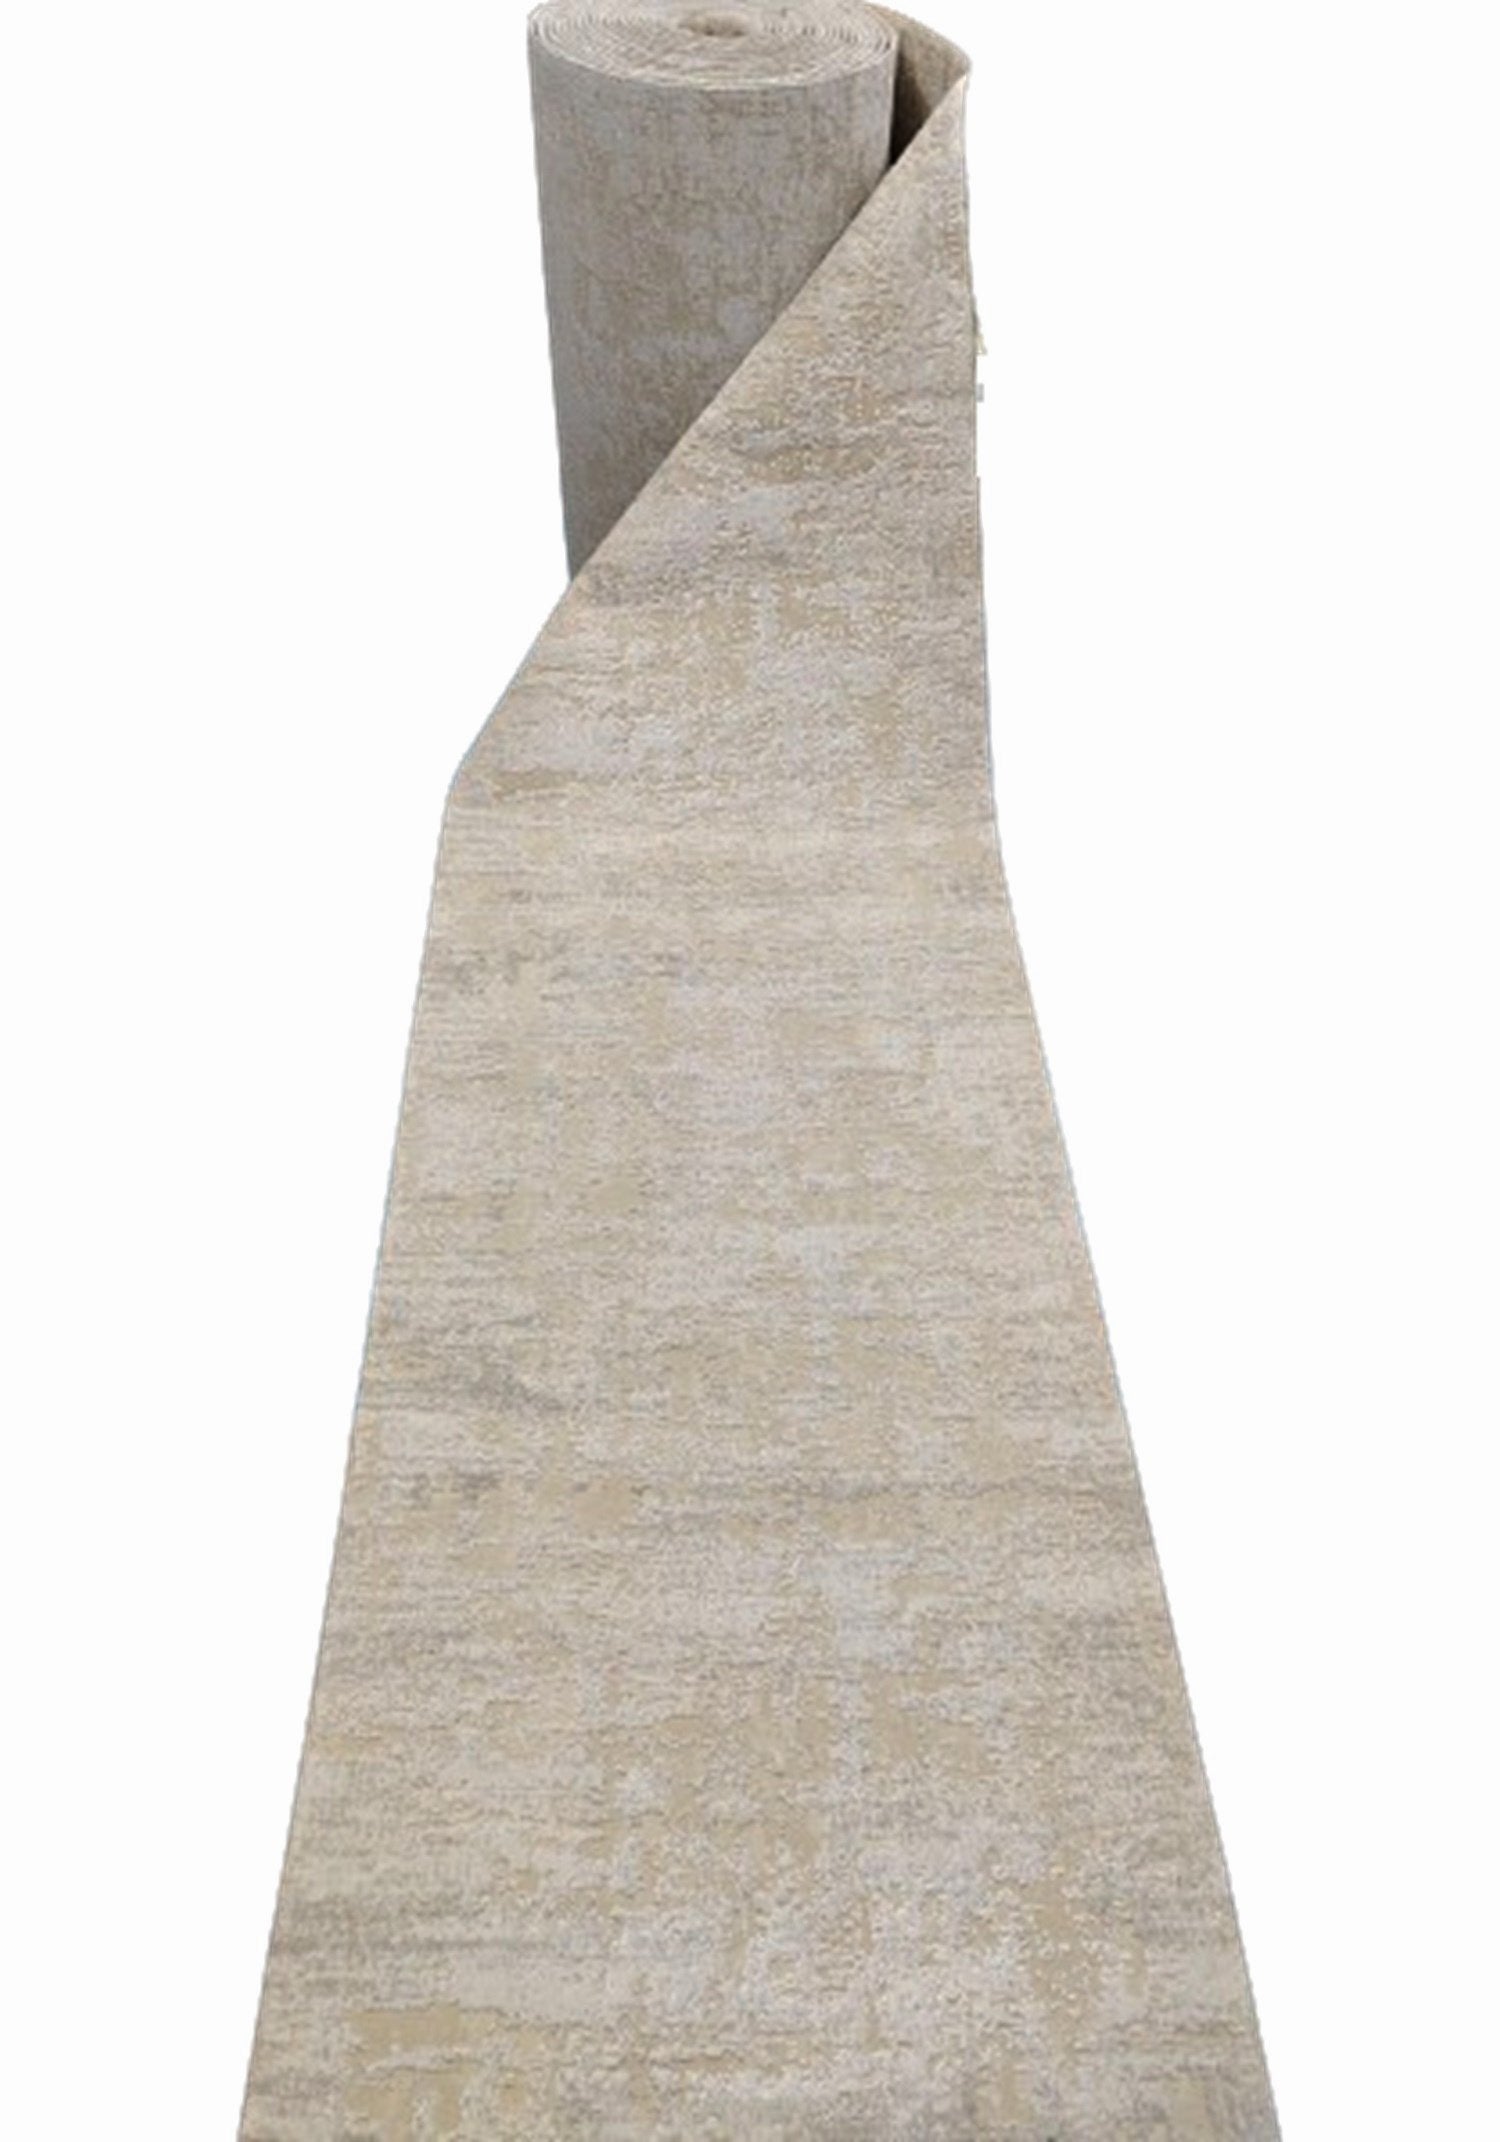 Traversa Pierre Cardin VP, crem, latime 60 cm (surfilata) - EmaCarpets